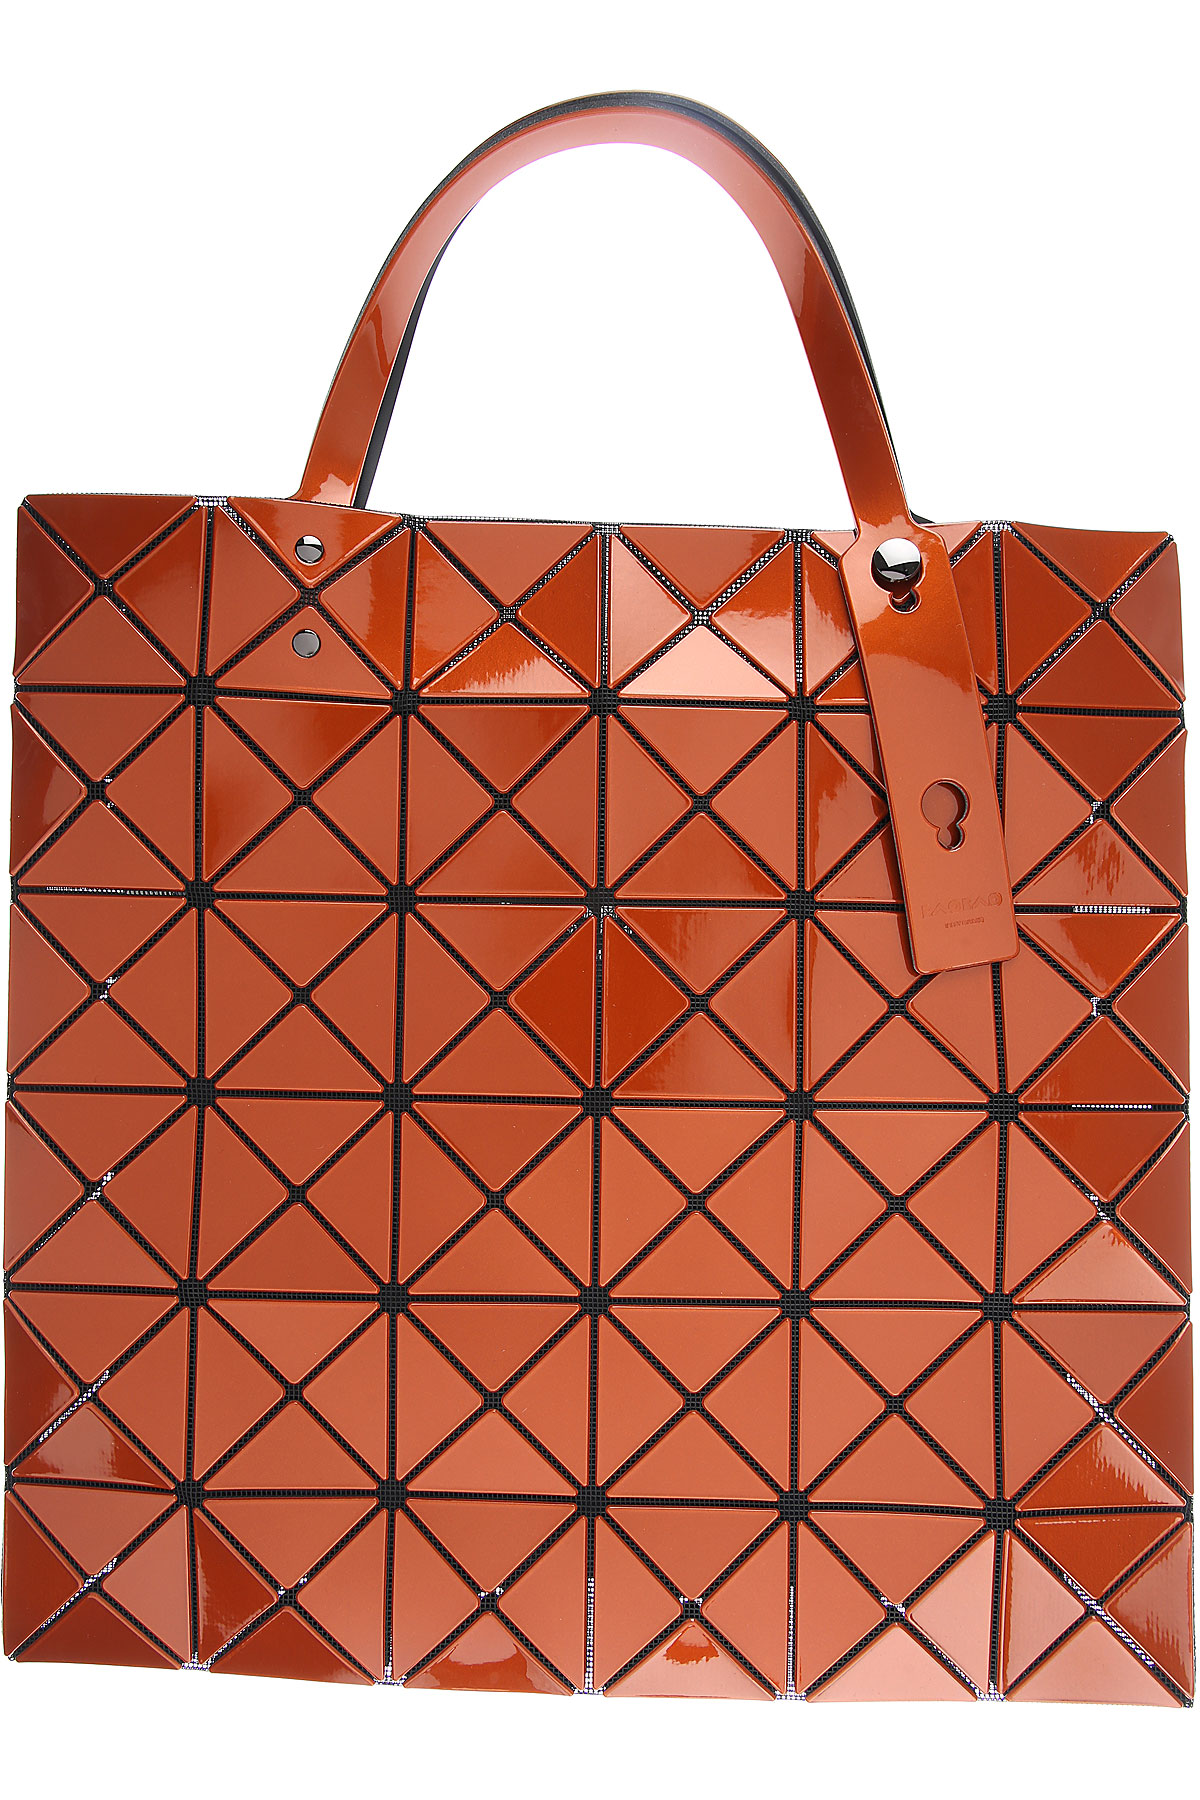 Handbags Issey Miyake, Style code: bb88-ag623-32